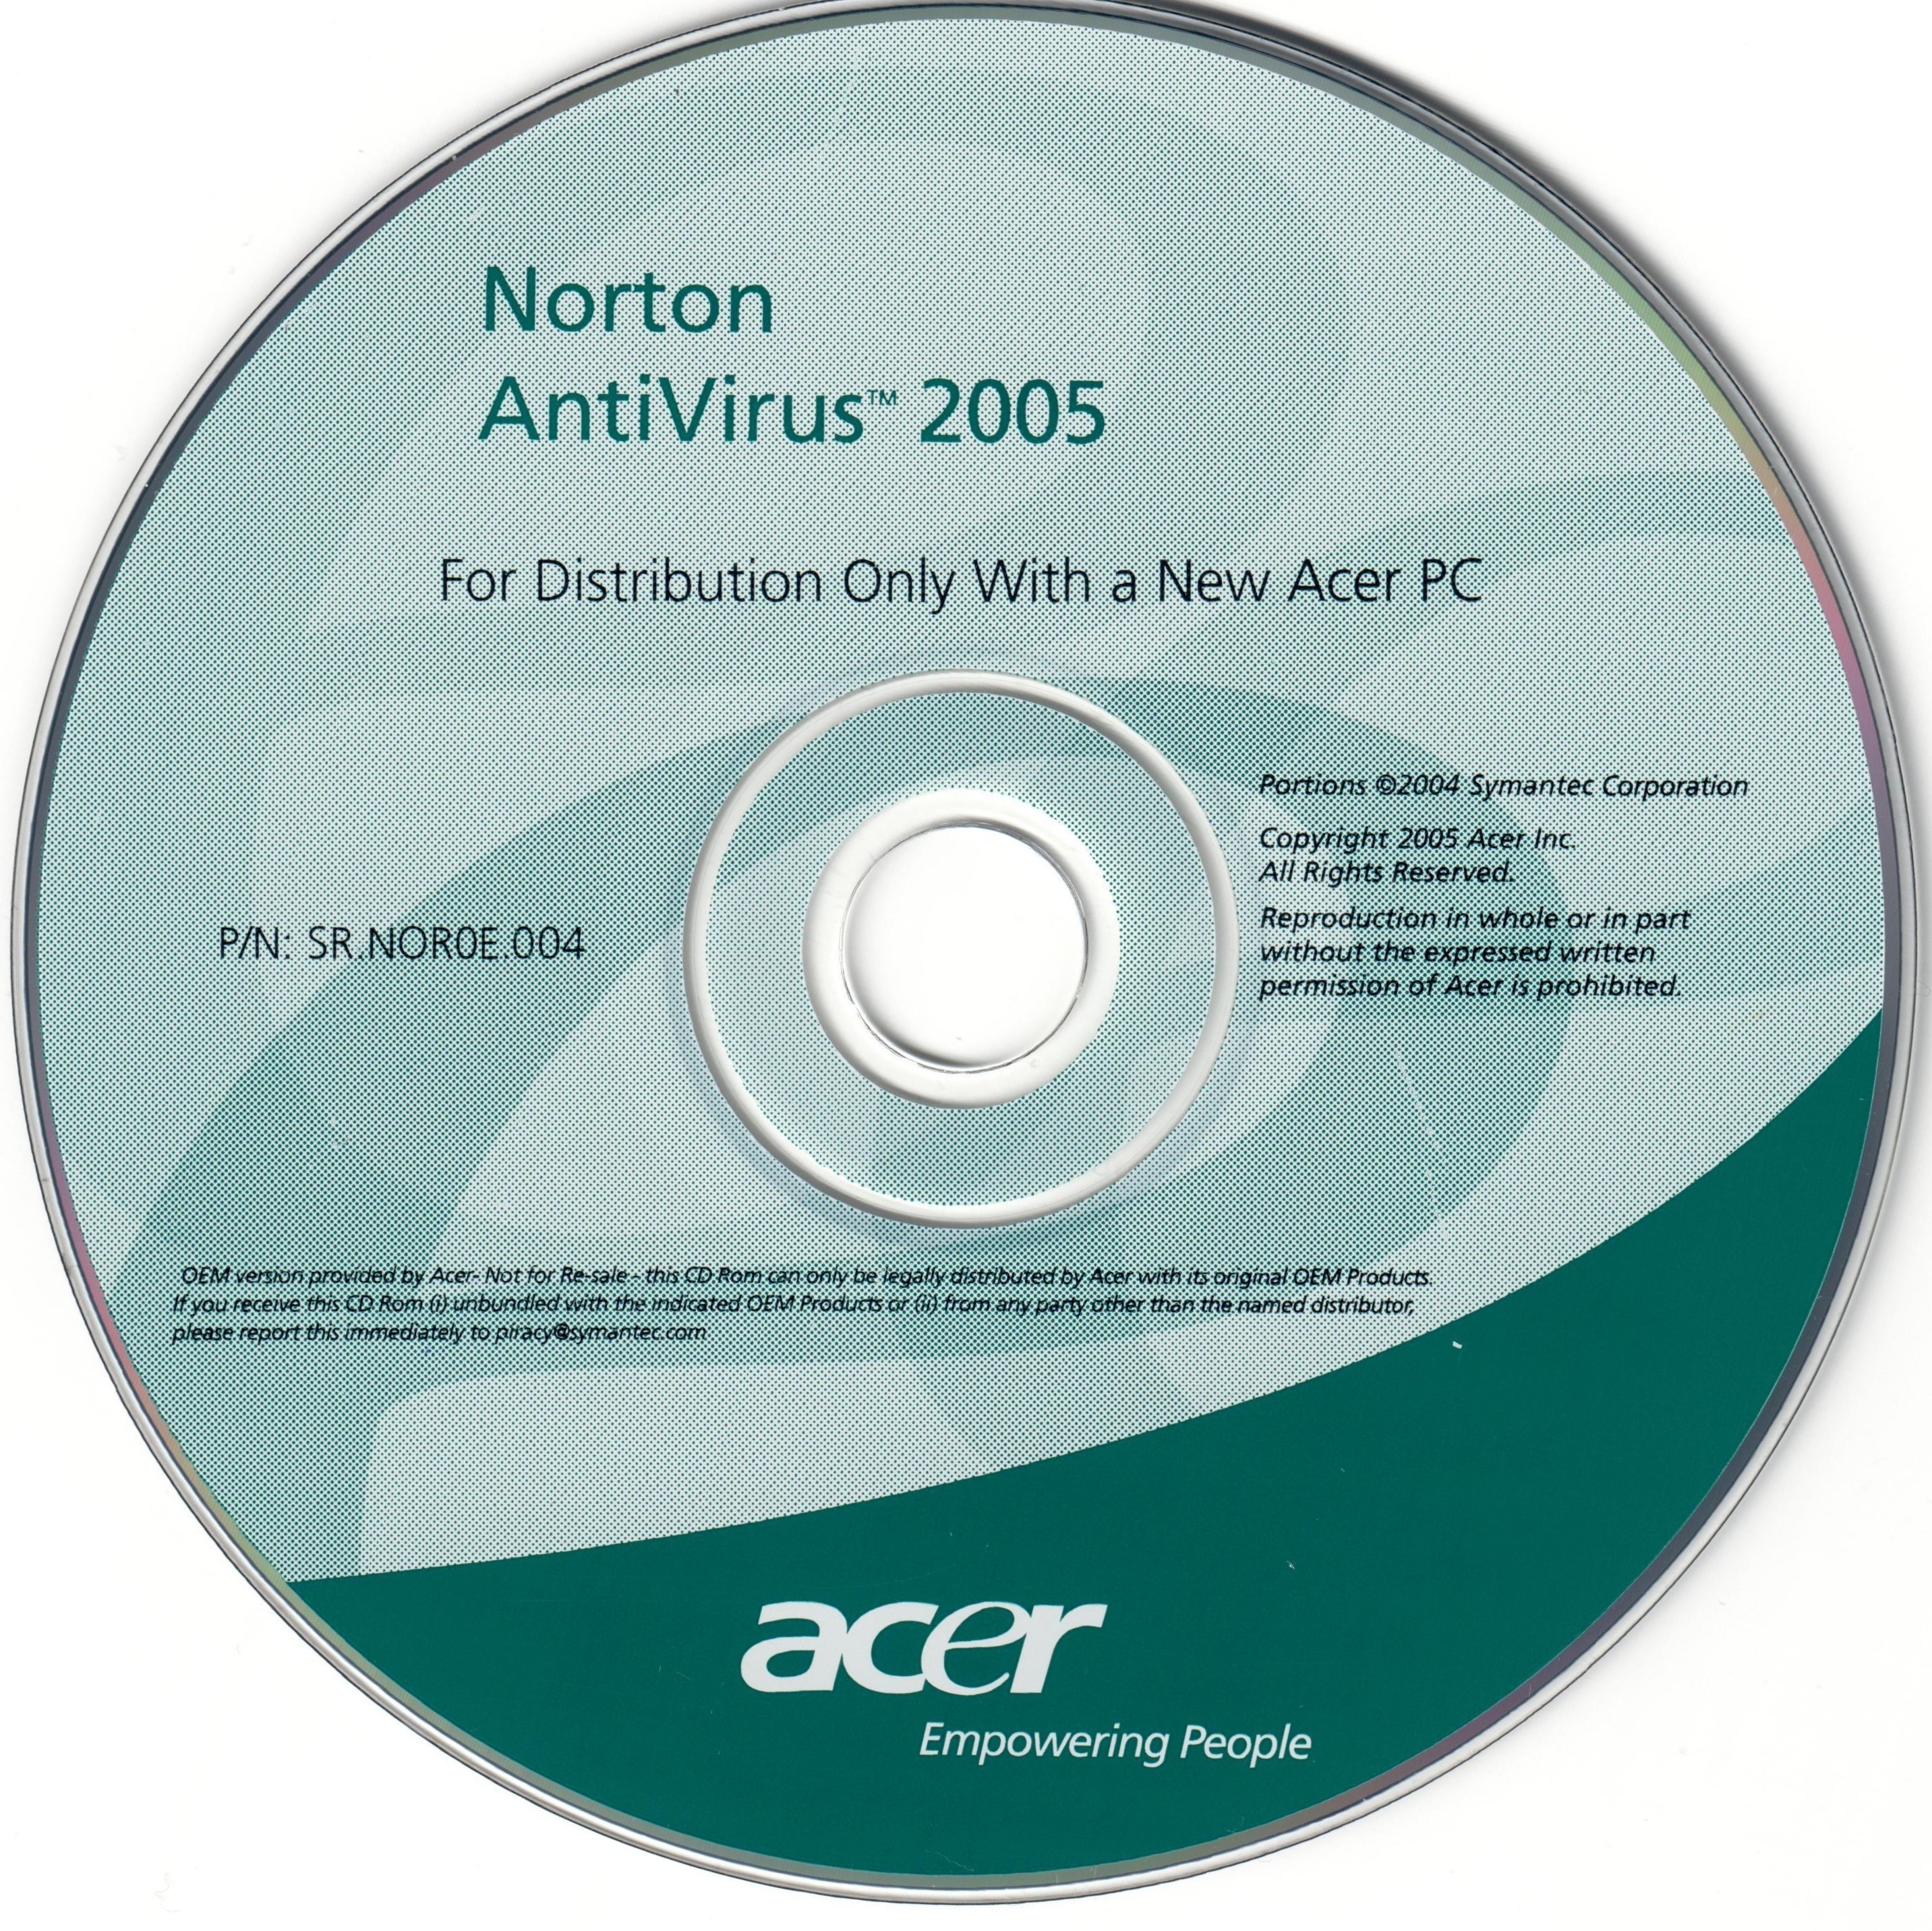 free norton antivirus 2005 full version